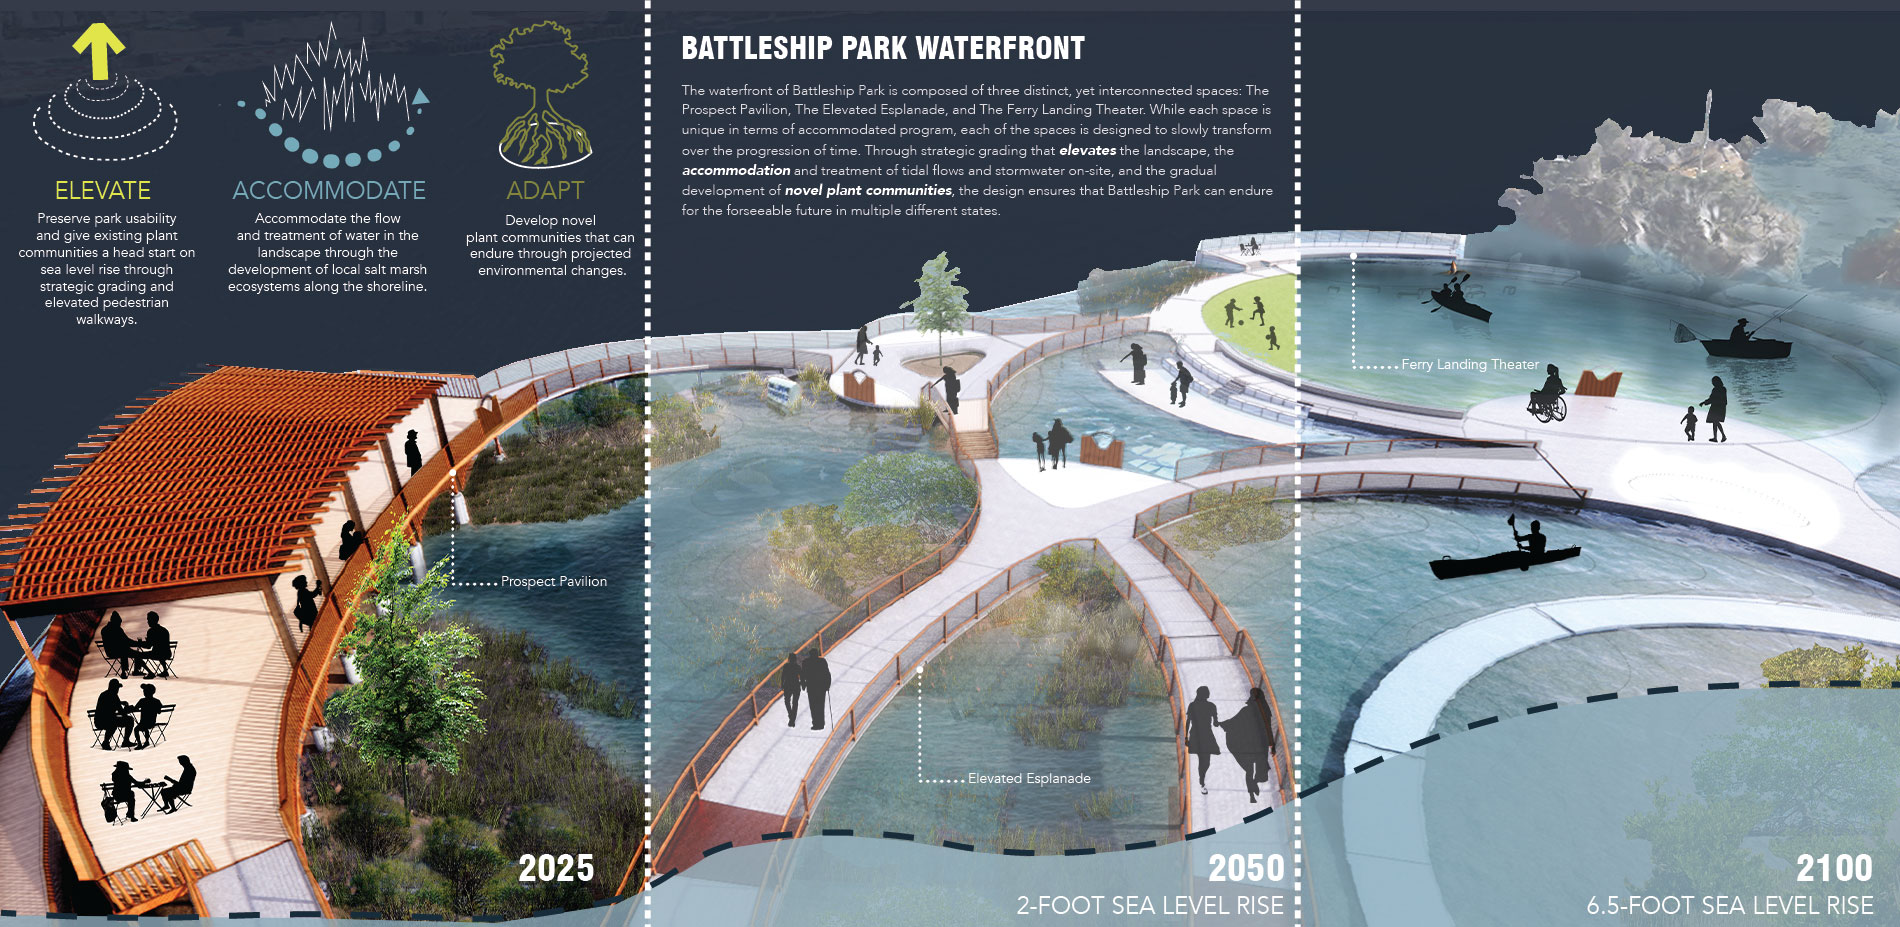 Battleship Park Waterfront